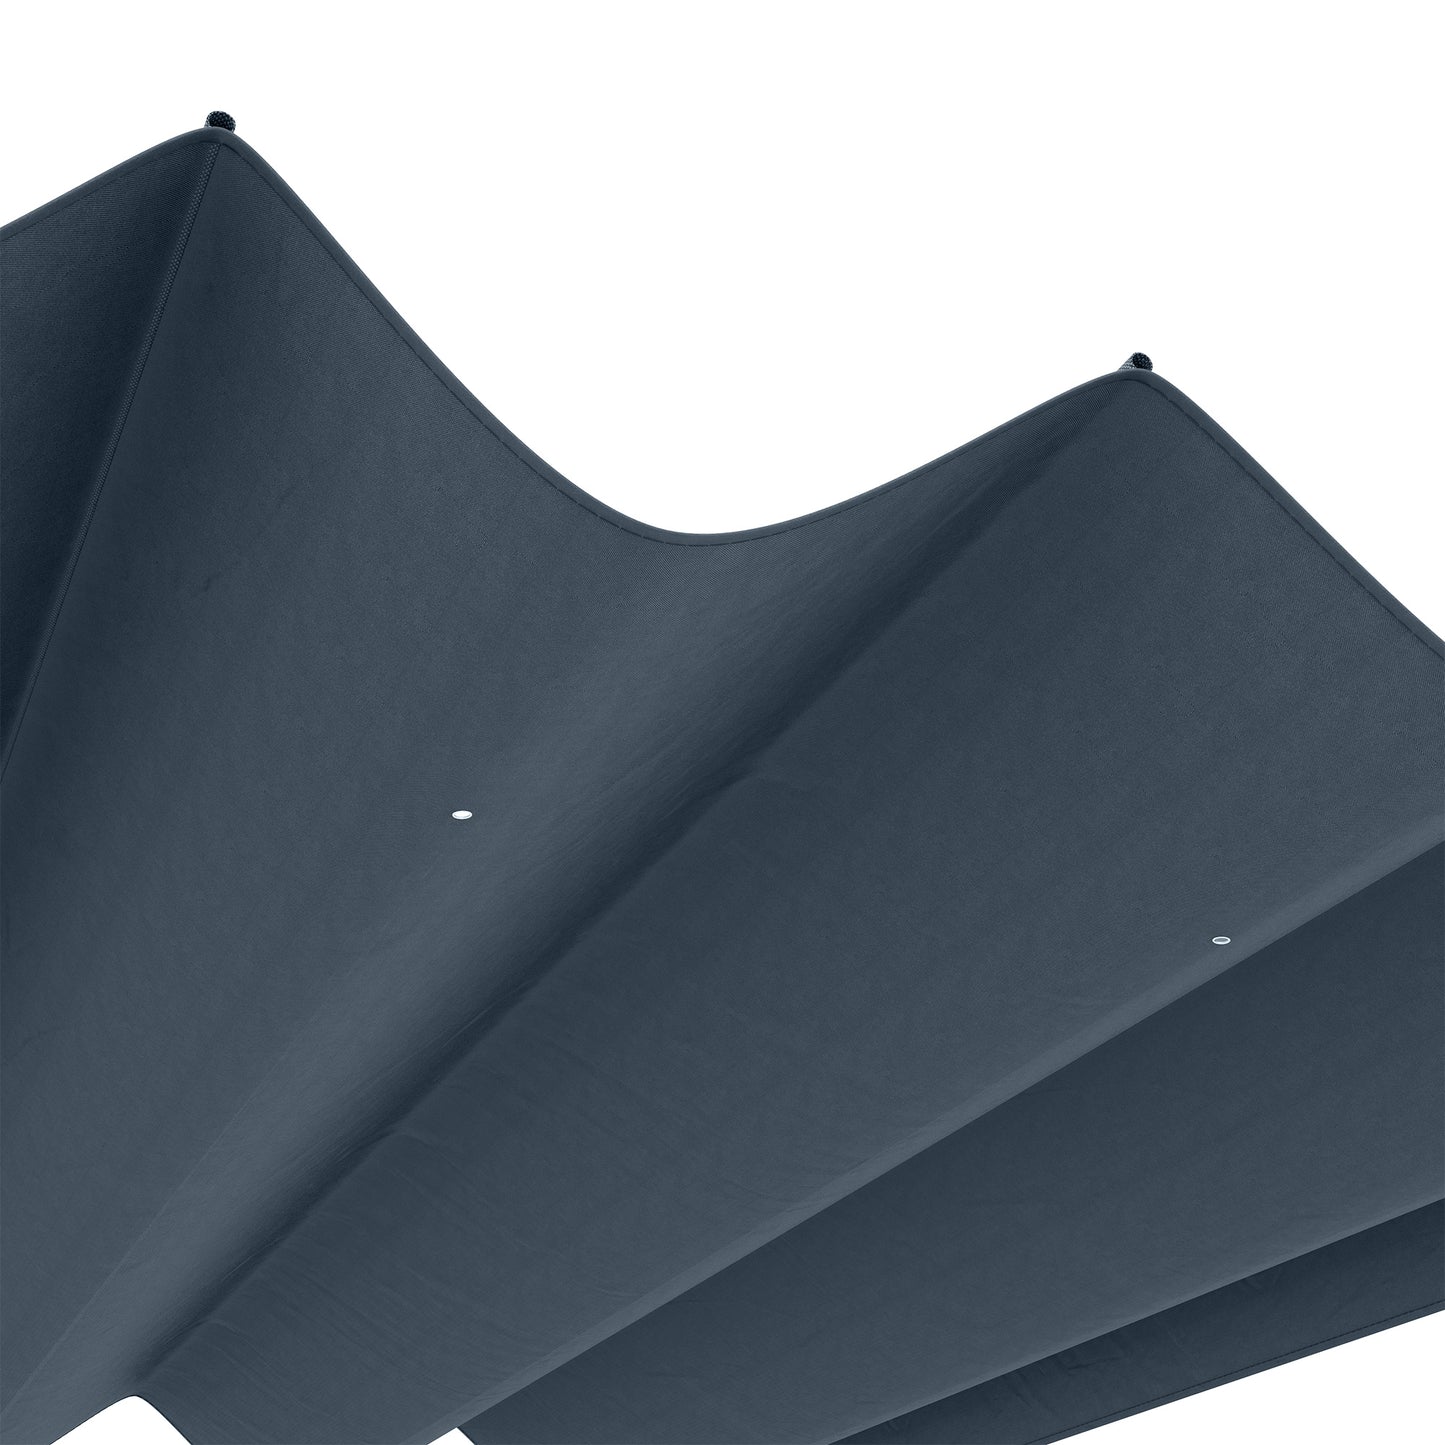 Outsunny Pergola Roof, Retractable Sun Shade Cover for 3 x 2.15m Pergola, UV30+ Protected, Dark Grey